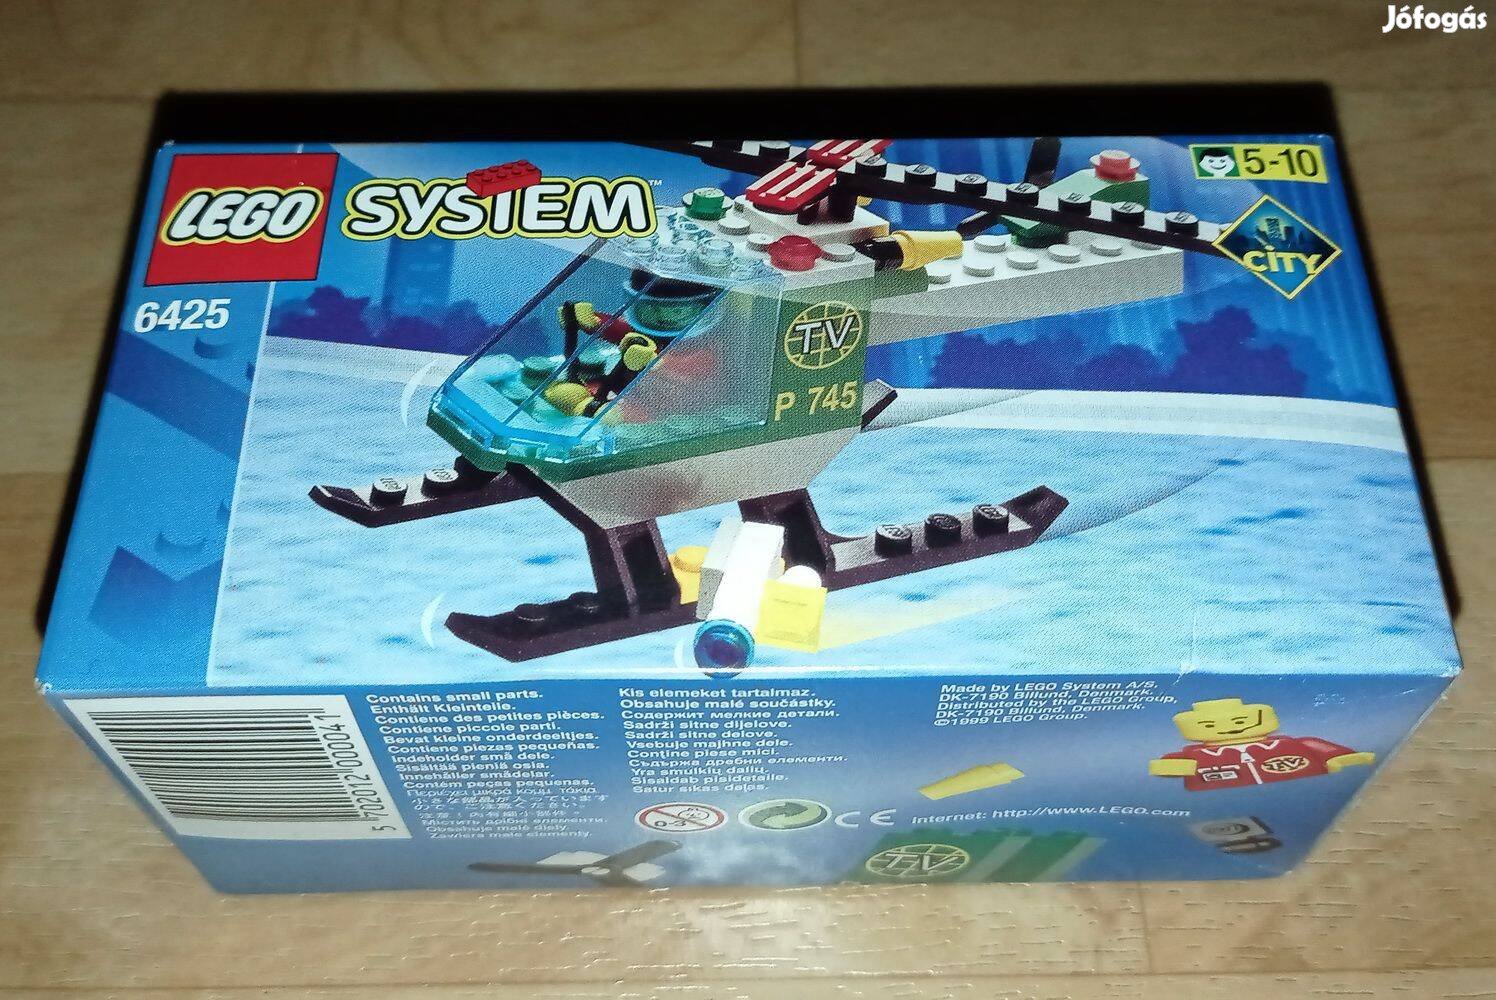 LEGO System Town, City: 6425 - TV Chopper